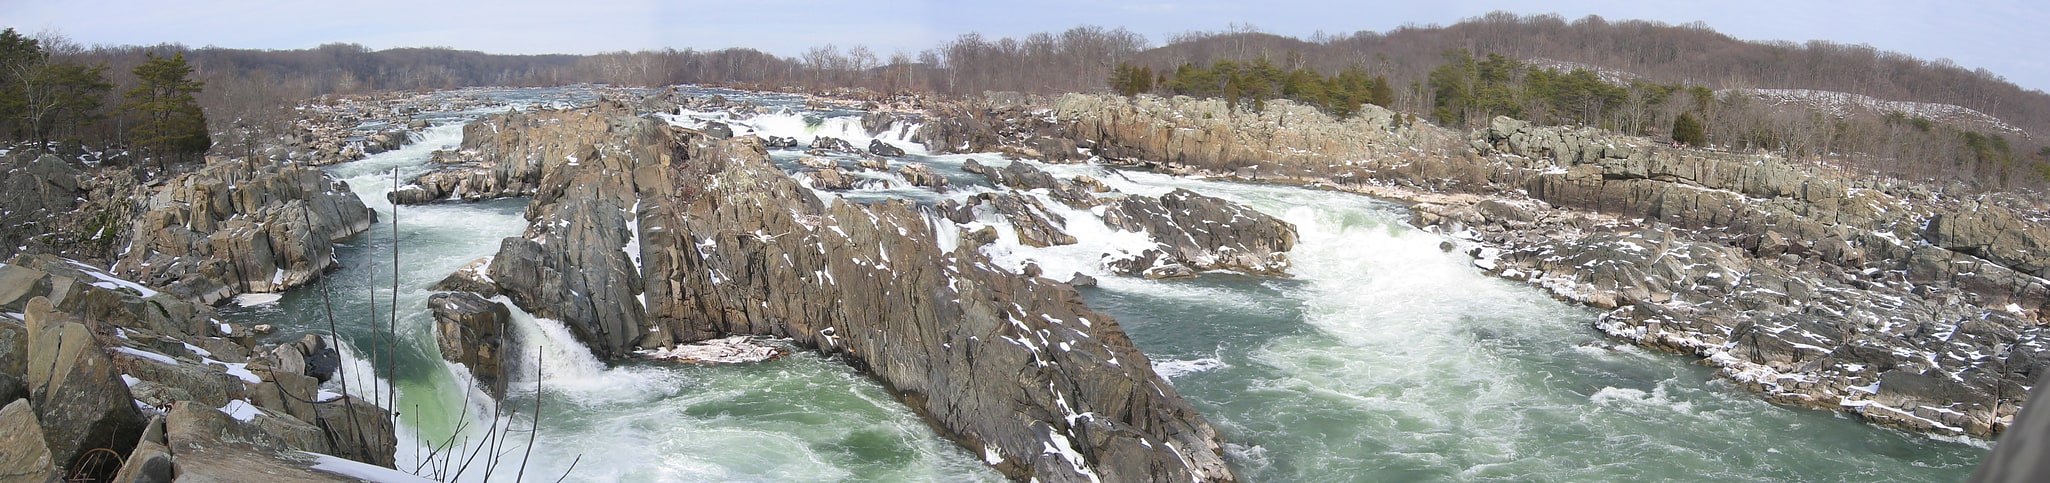 Great Falls, United States